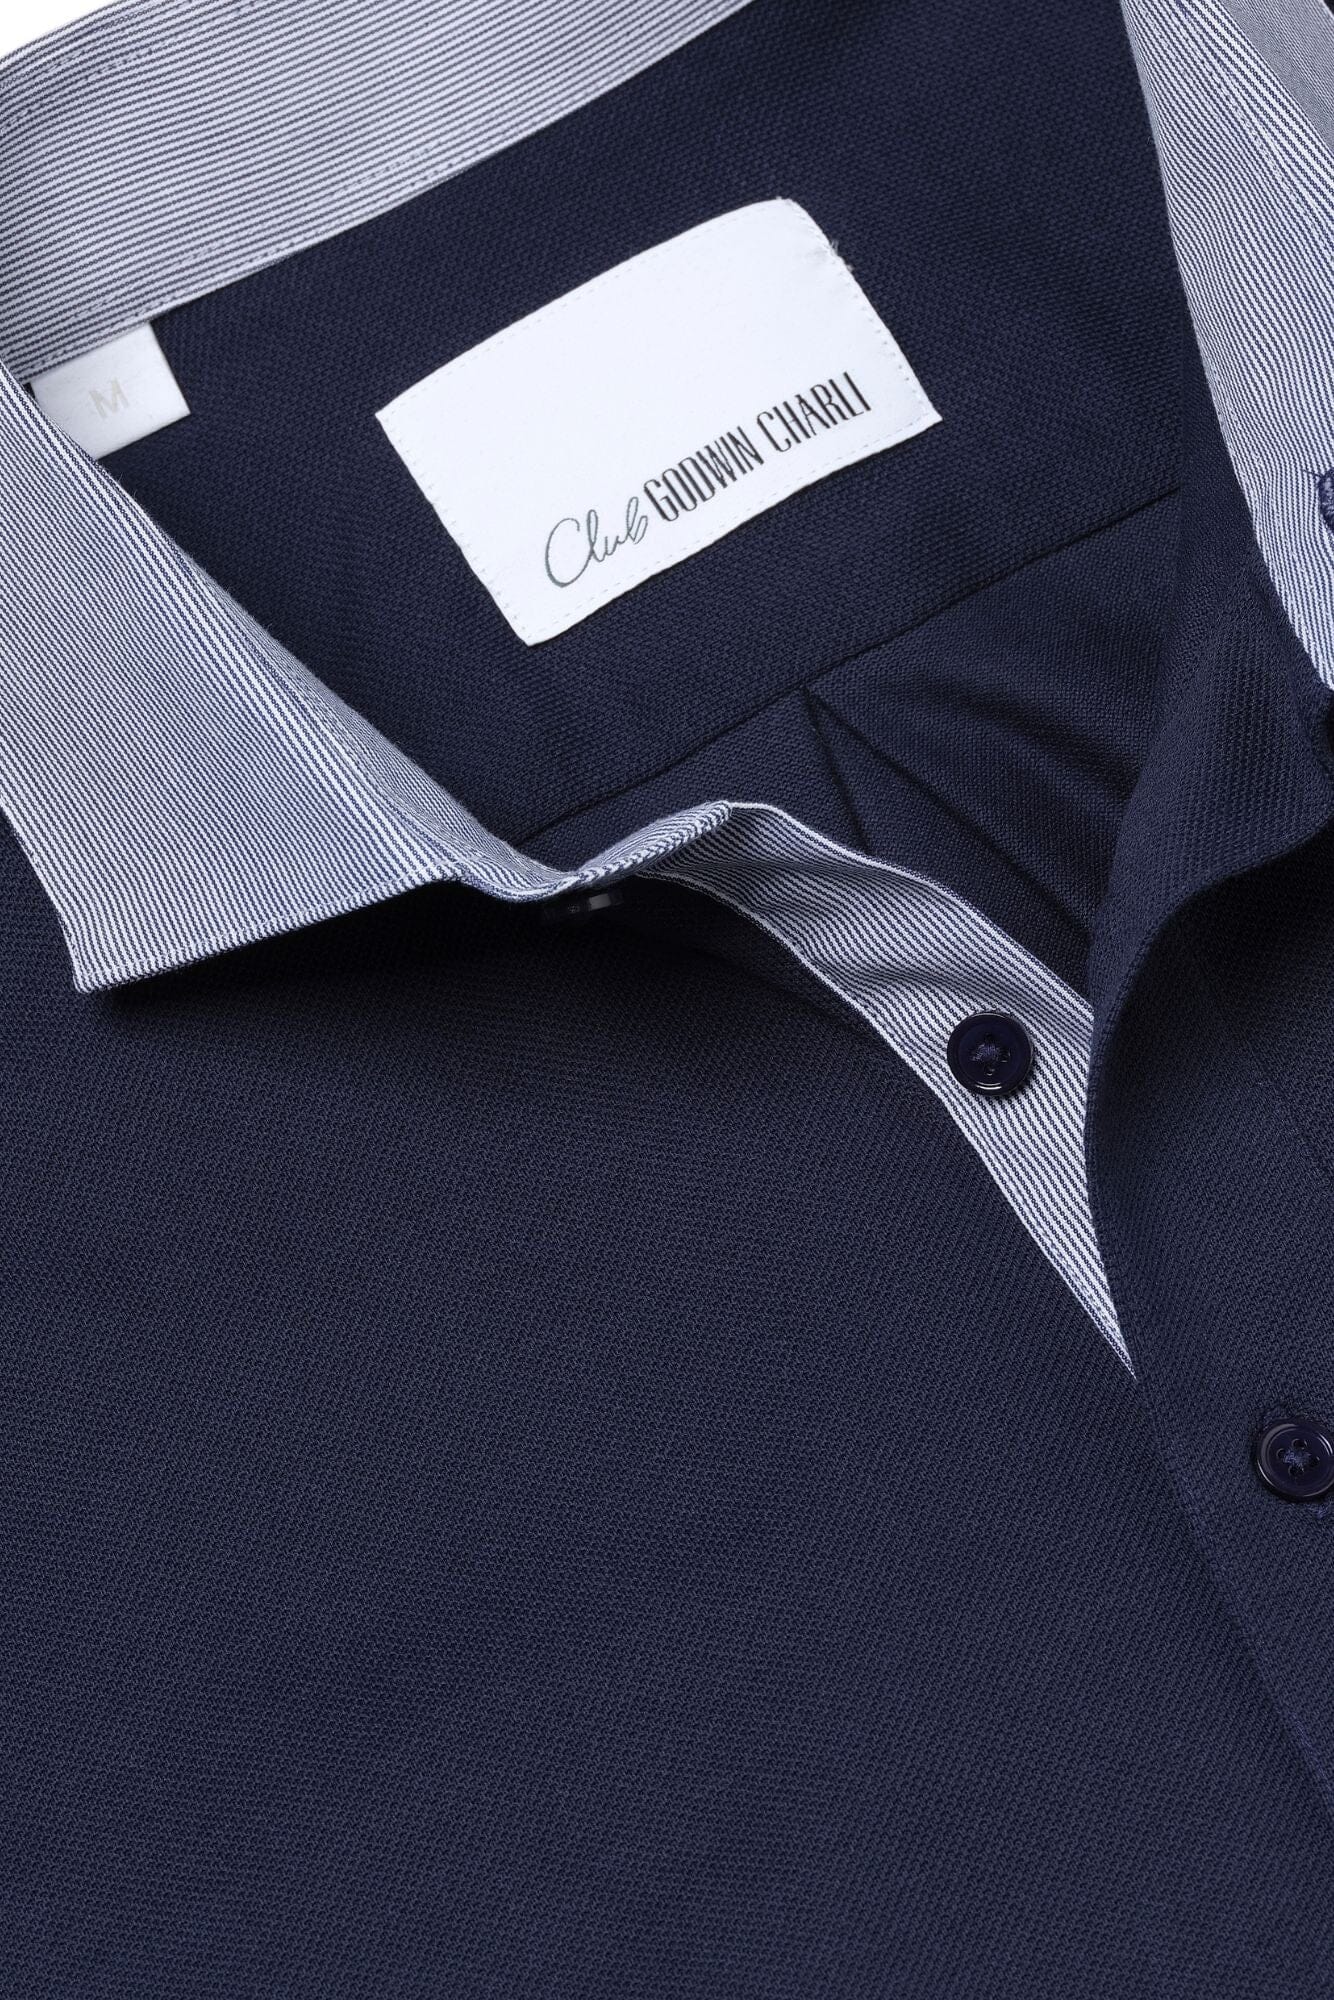 CGC Polo Shirt - Navy Pique with Mini Stripe Contrast